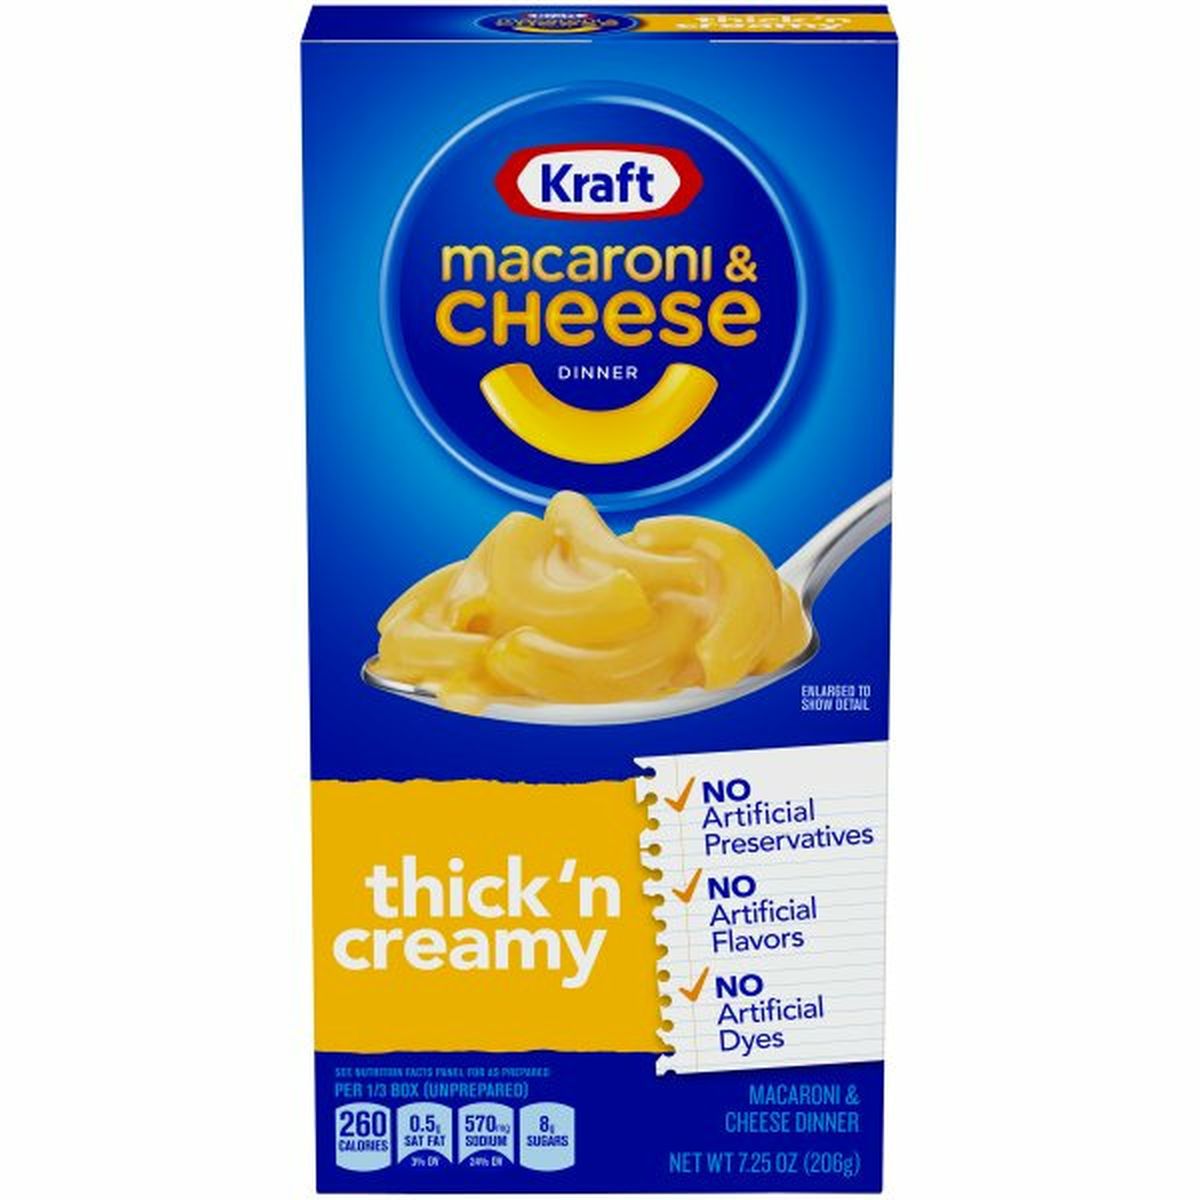 Calories in Kraft Premium Thick 'n Creamy Macaroni & Cheese Dinner